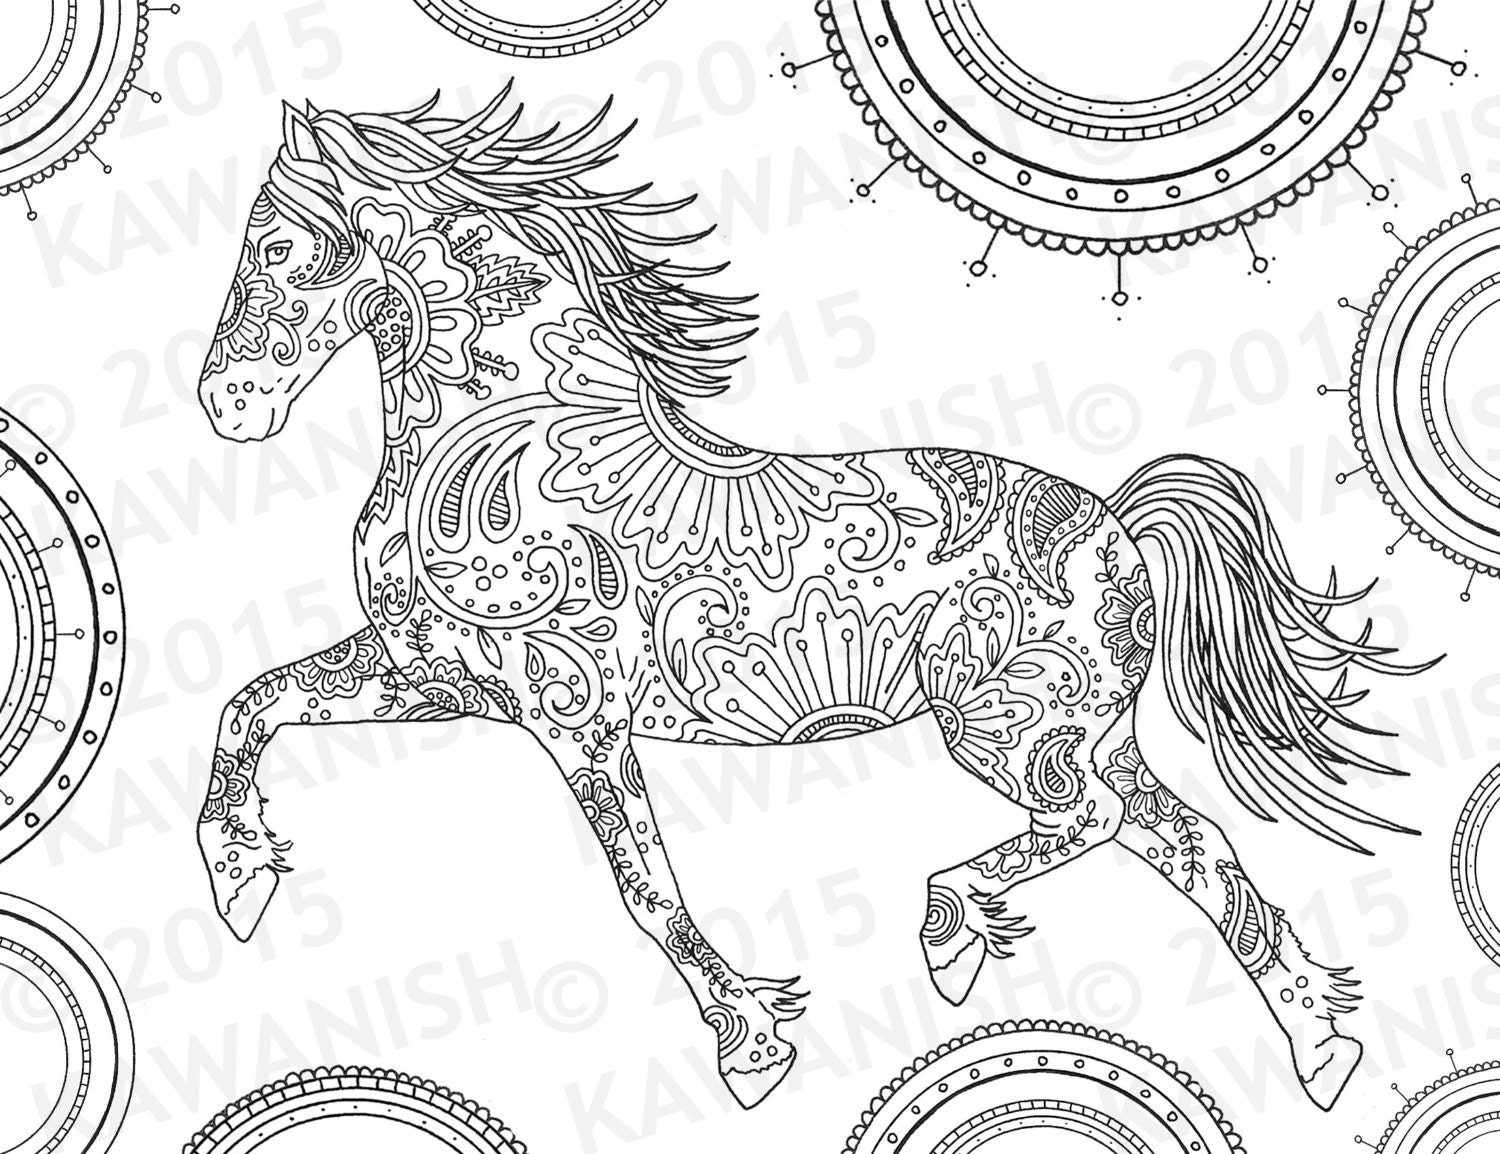 Horse adult coloring page gift wall art mandala zentangle